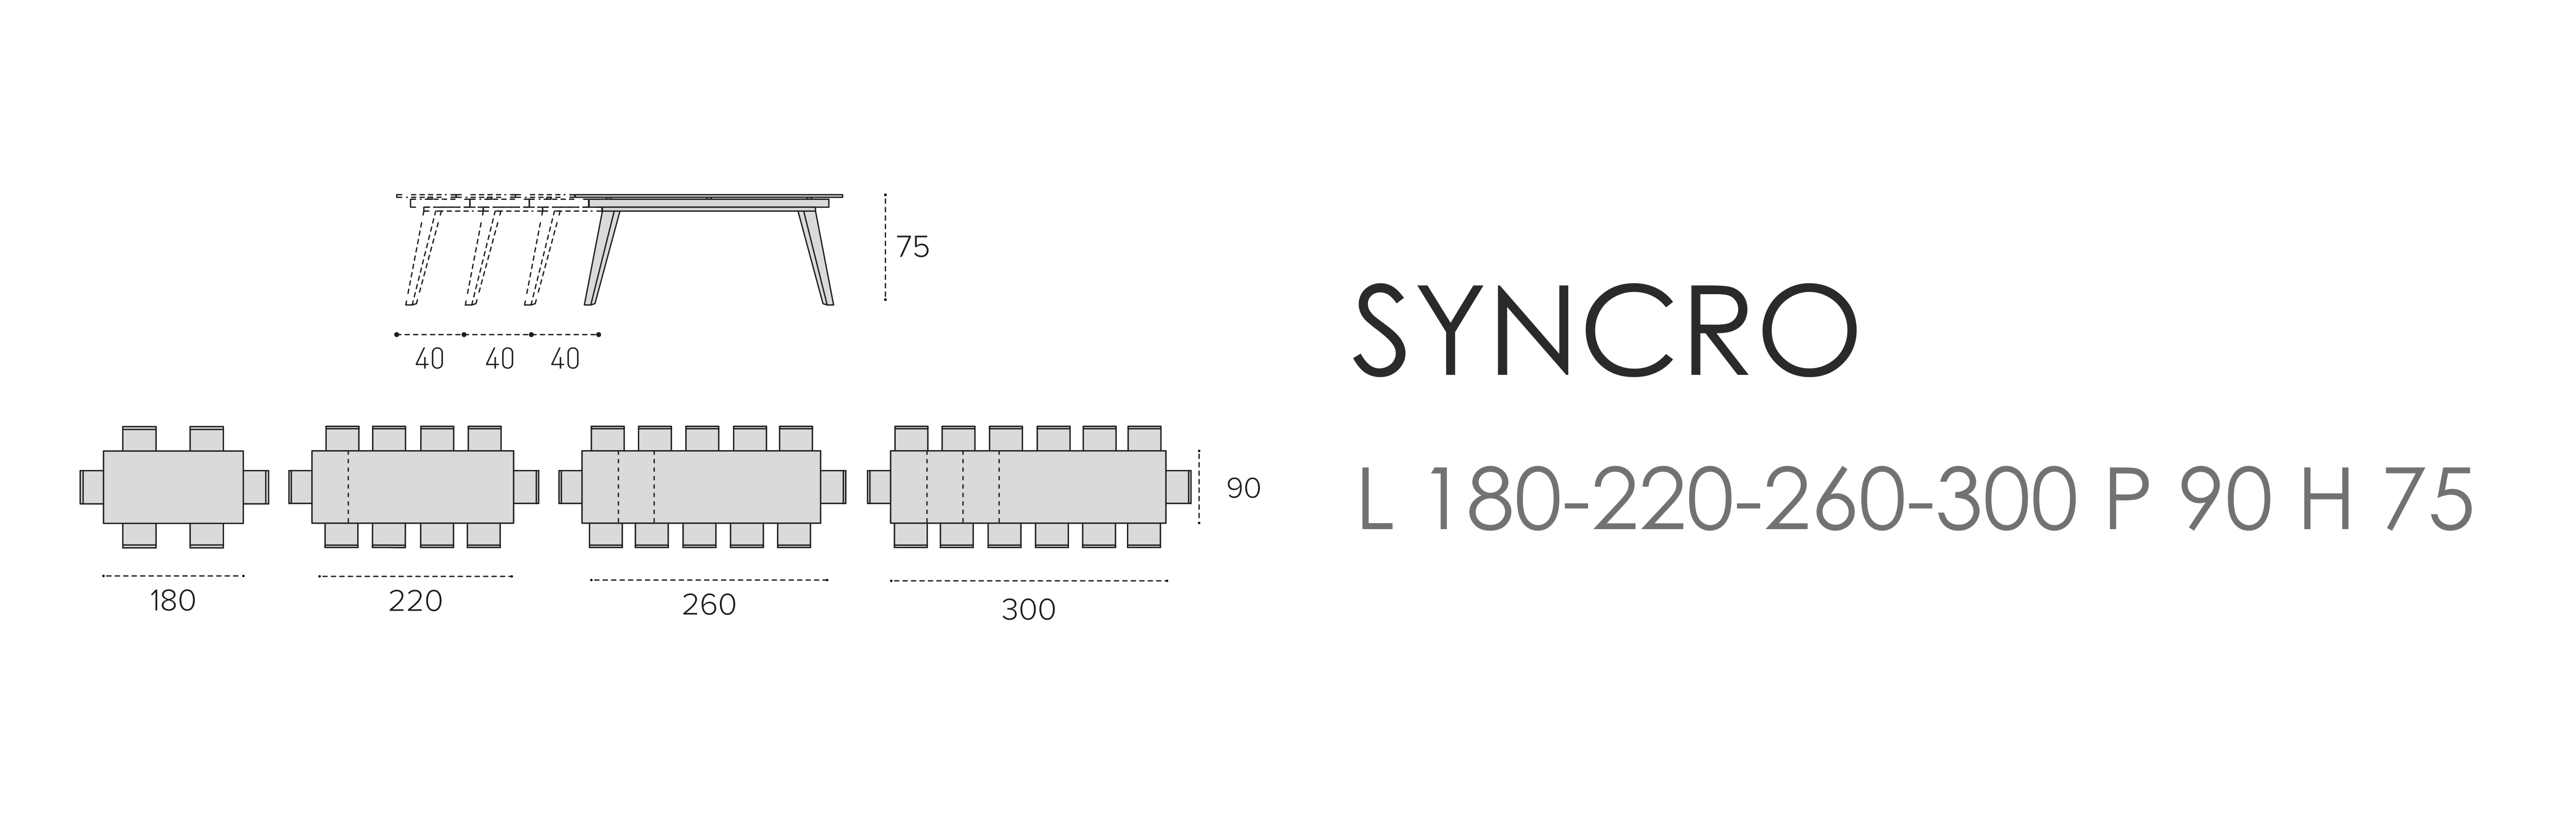 Syncro L 180-220-260-300 P 90 H 75